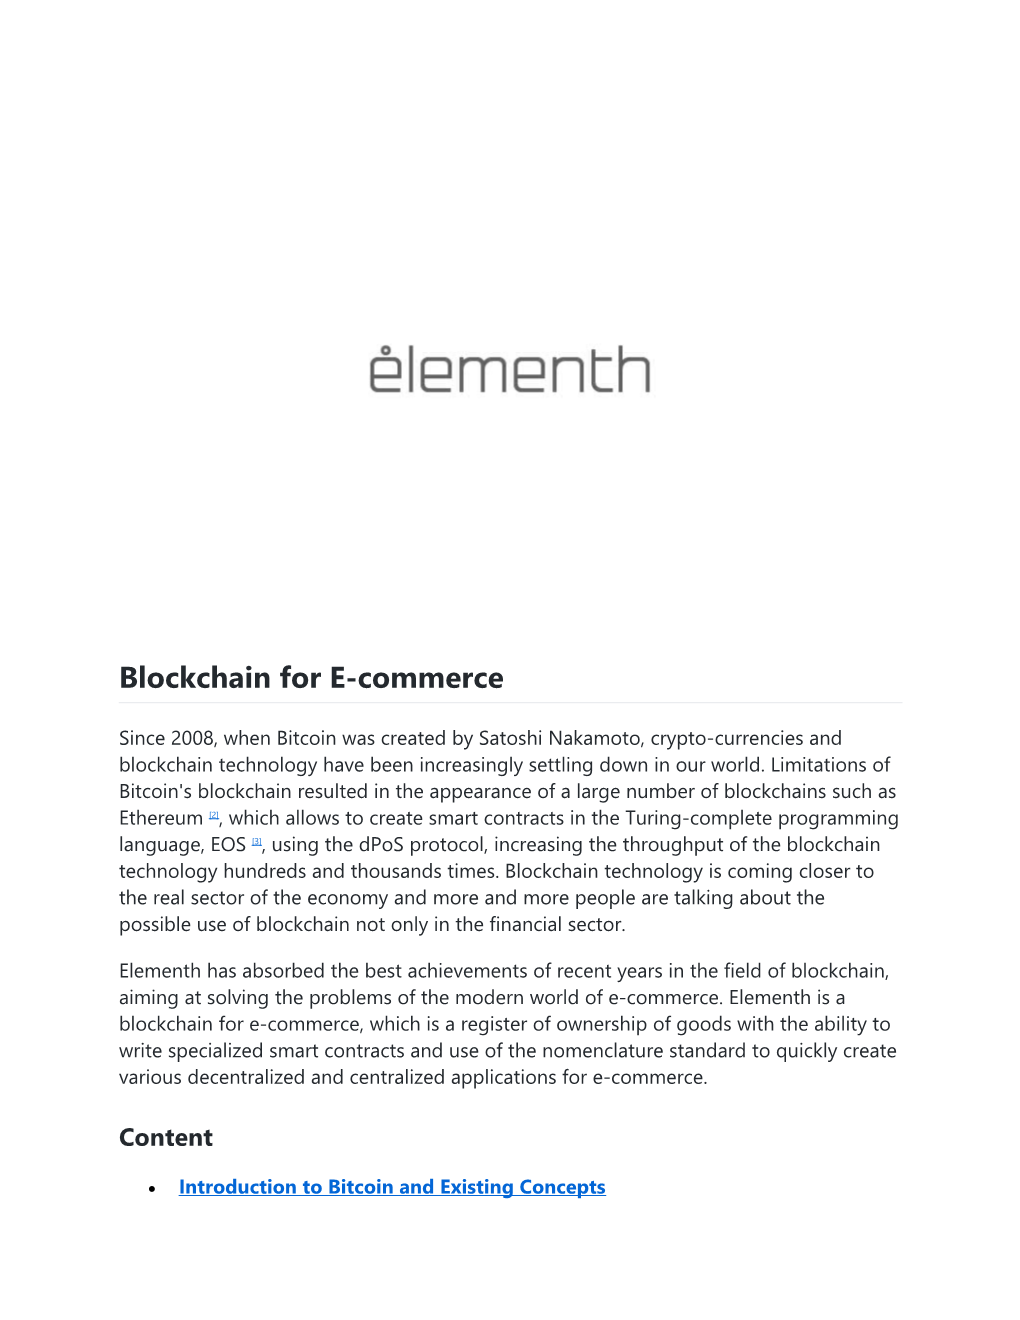 Blockchain for E-Commerce